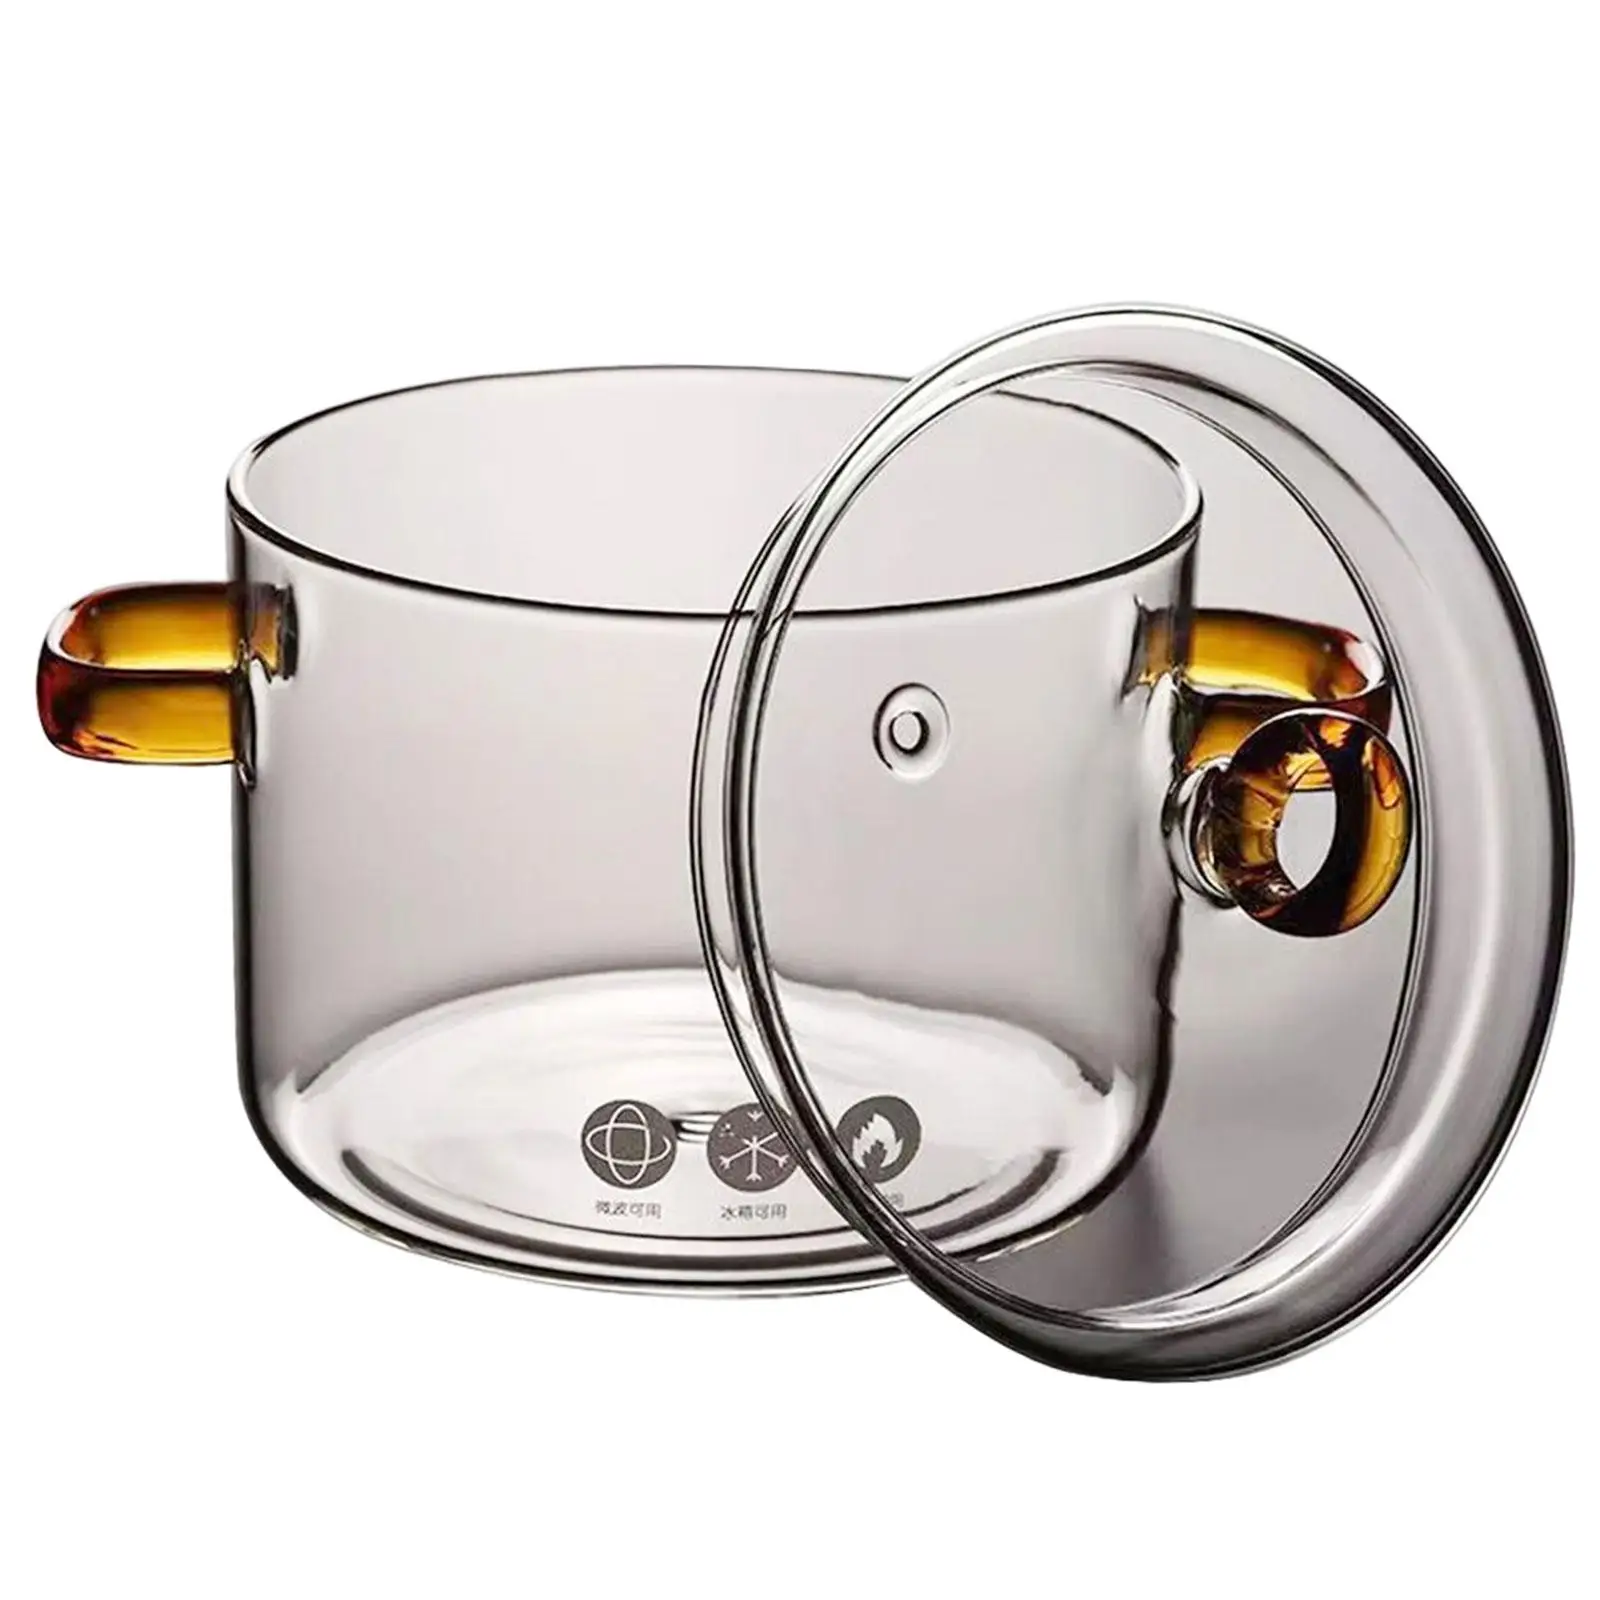 Glass Saucepan Transparent with Lid Stockpots Microwave Heating Soup Pot Simmer Pot for Noodles Kitchen Cooking Milk Soup